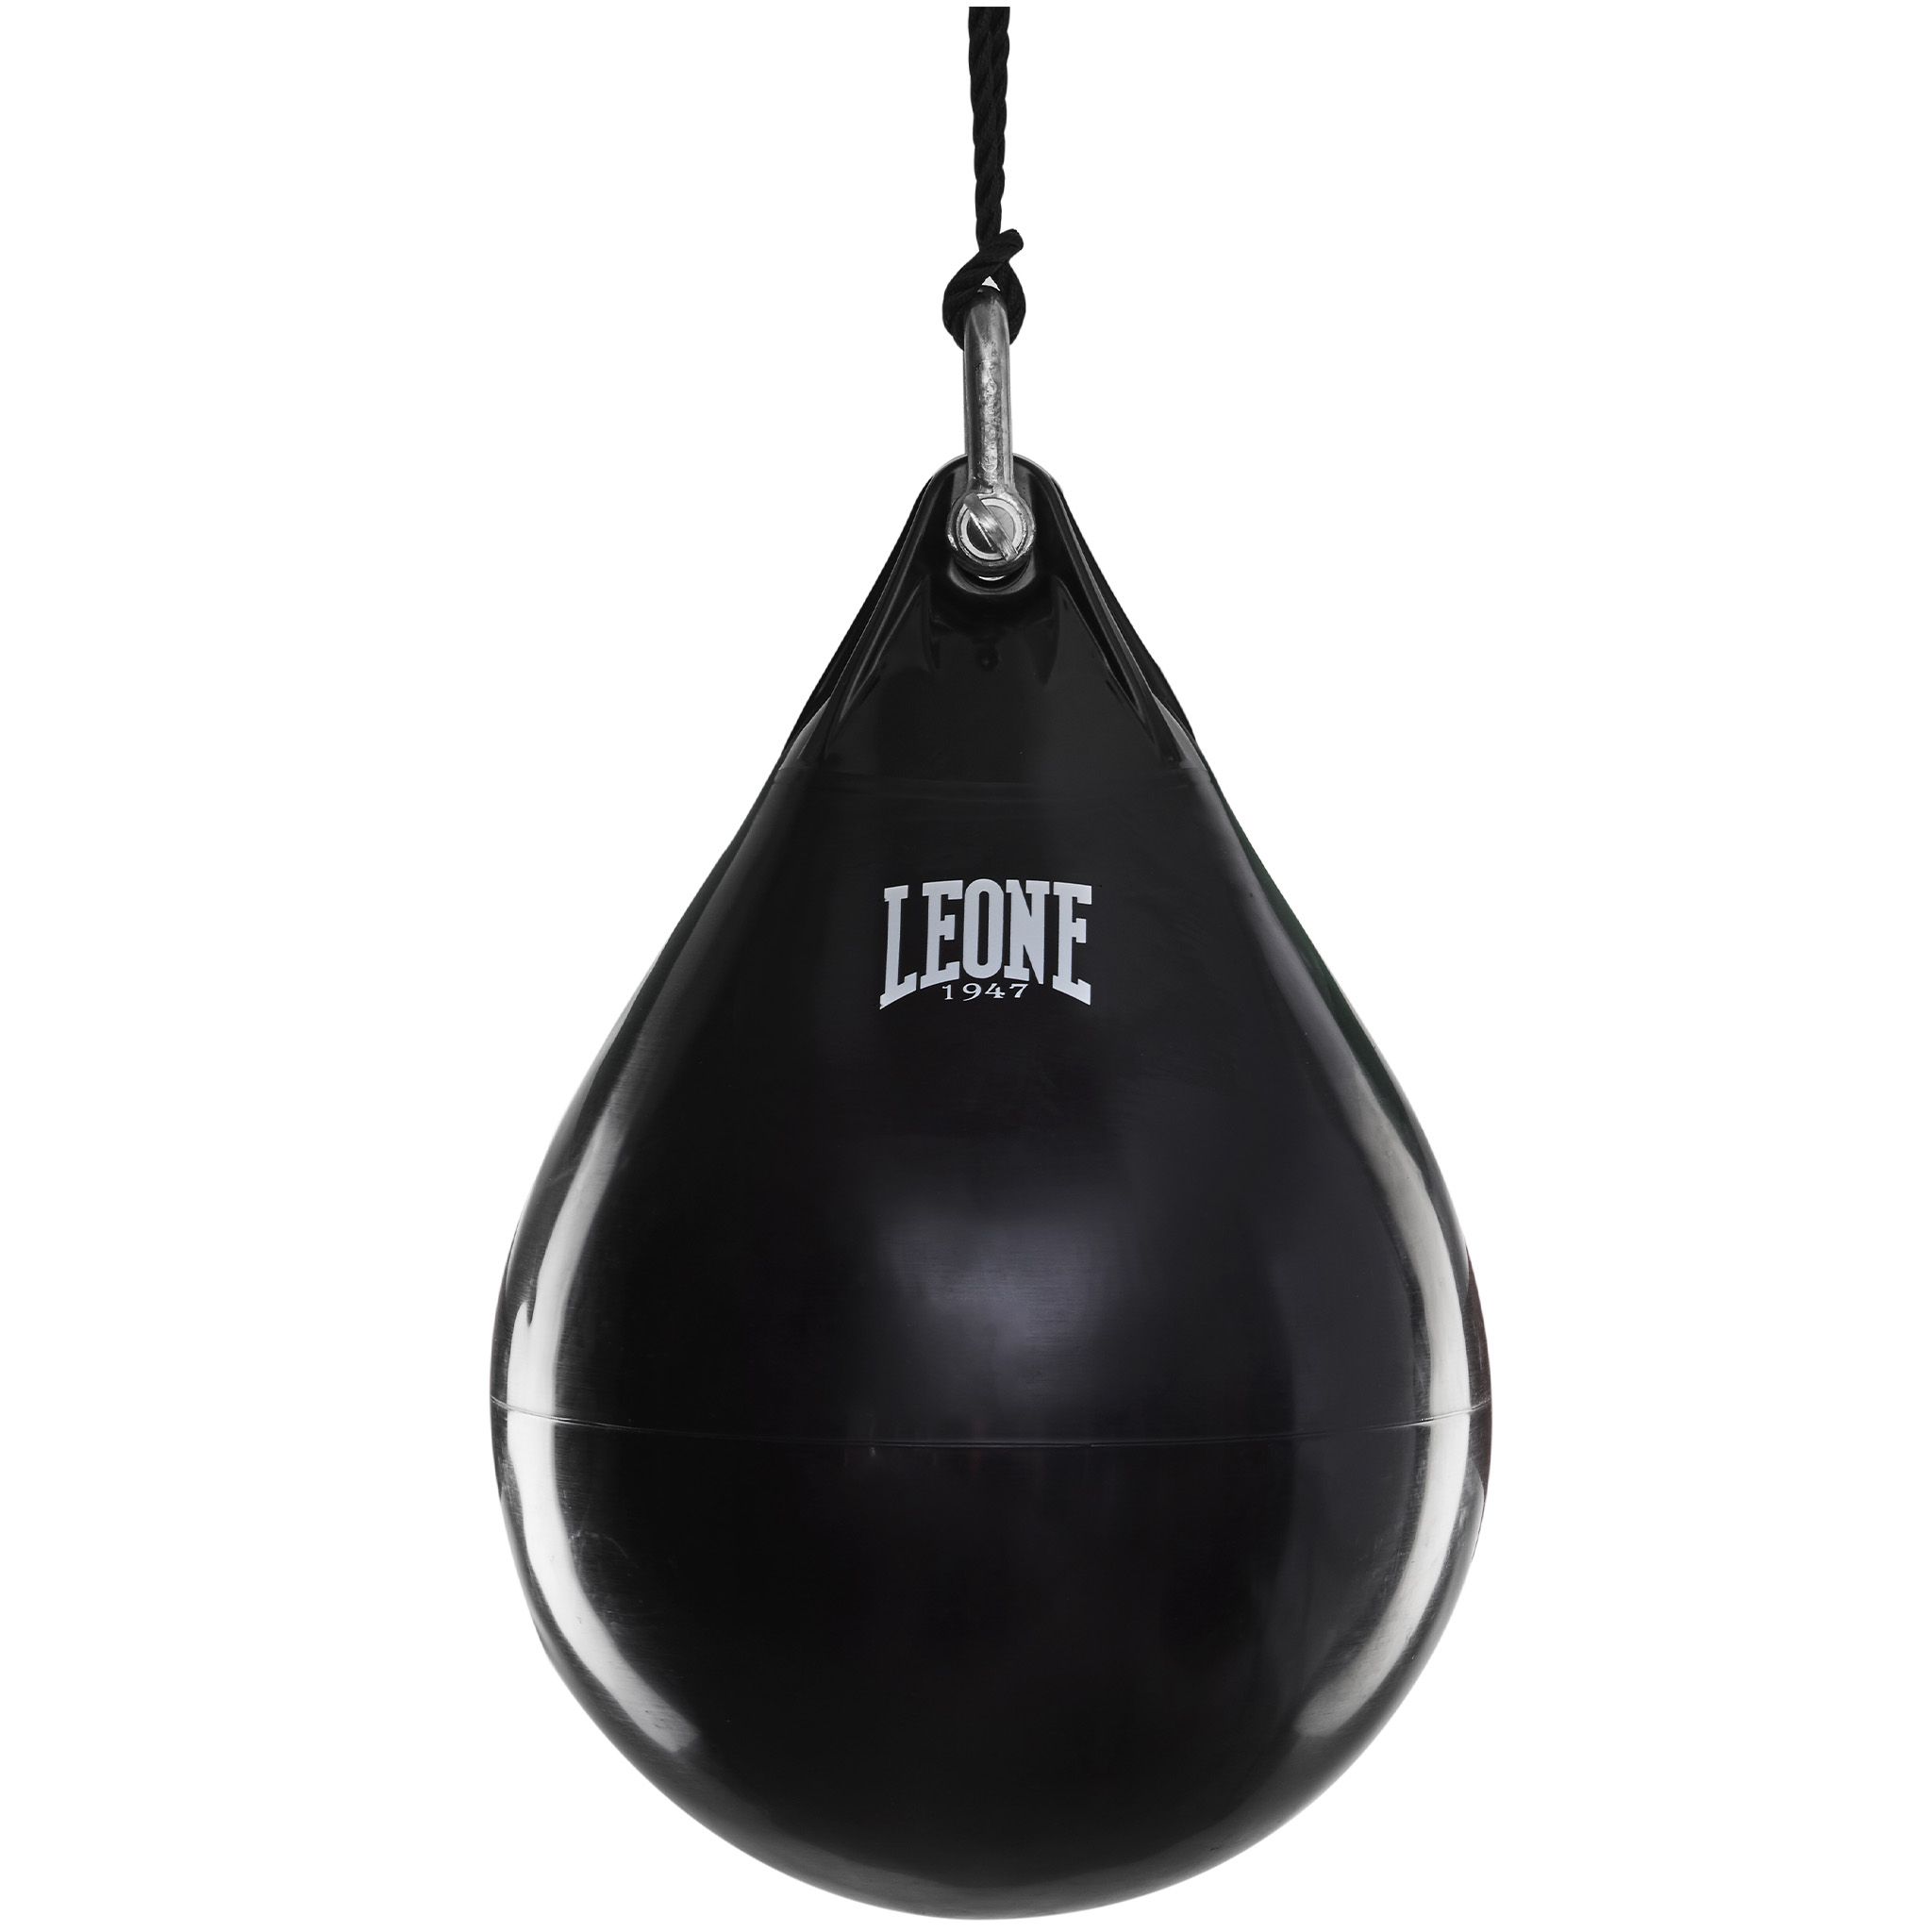 Saco de boxeo relleno de agua Leone 1947 premium 45 kg negro AT819 1